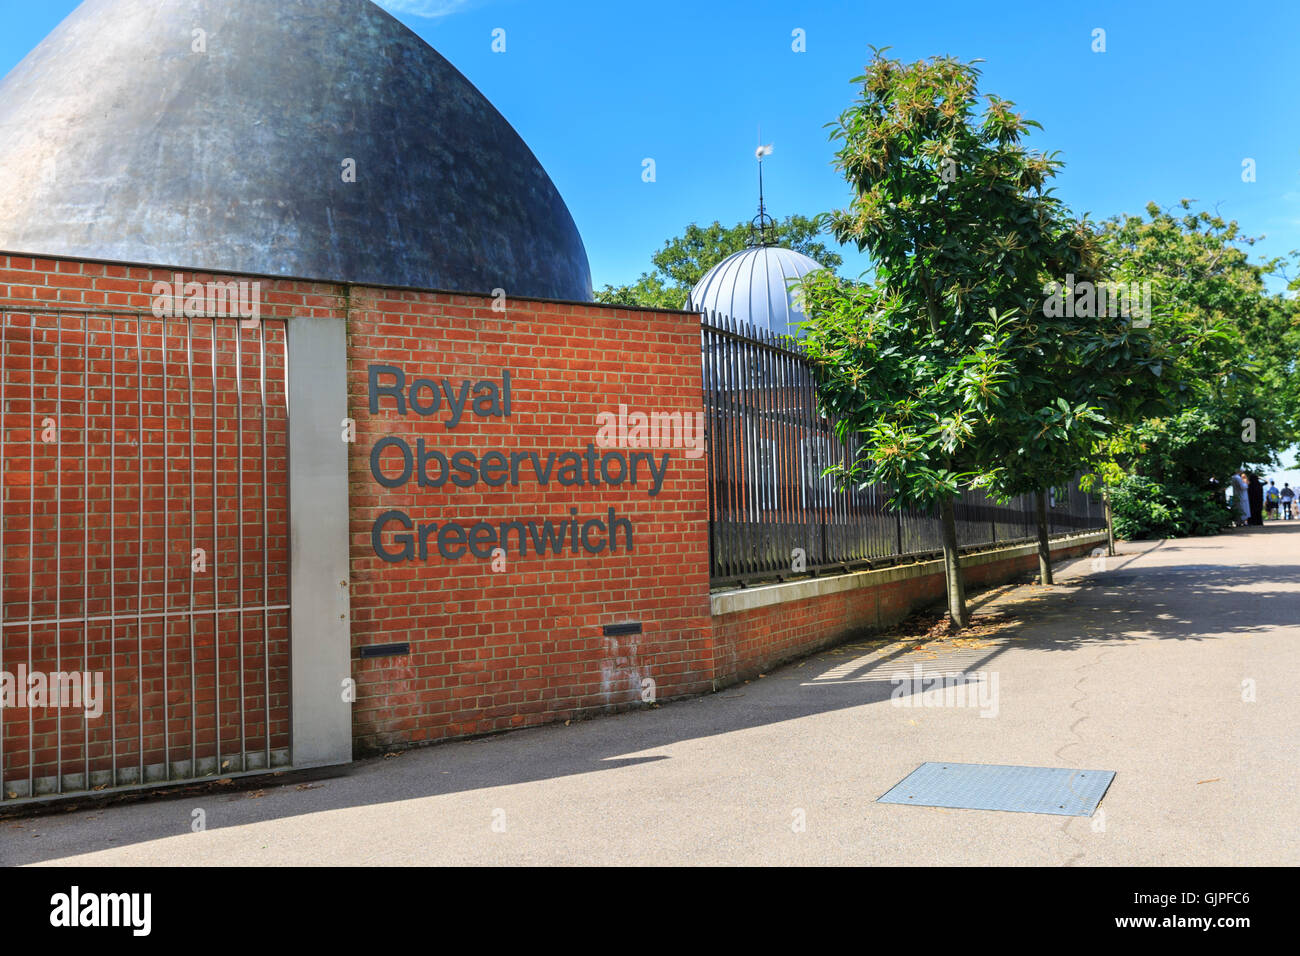 Il Royal Orbservatory, Greenwich, Londra, Inghilterra Foto Stock